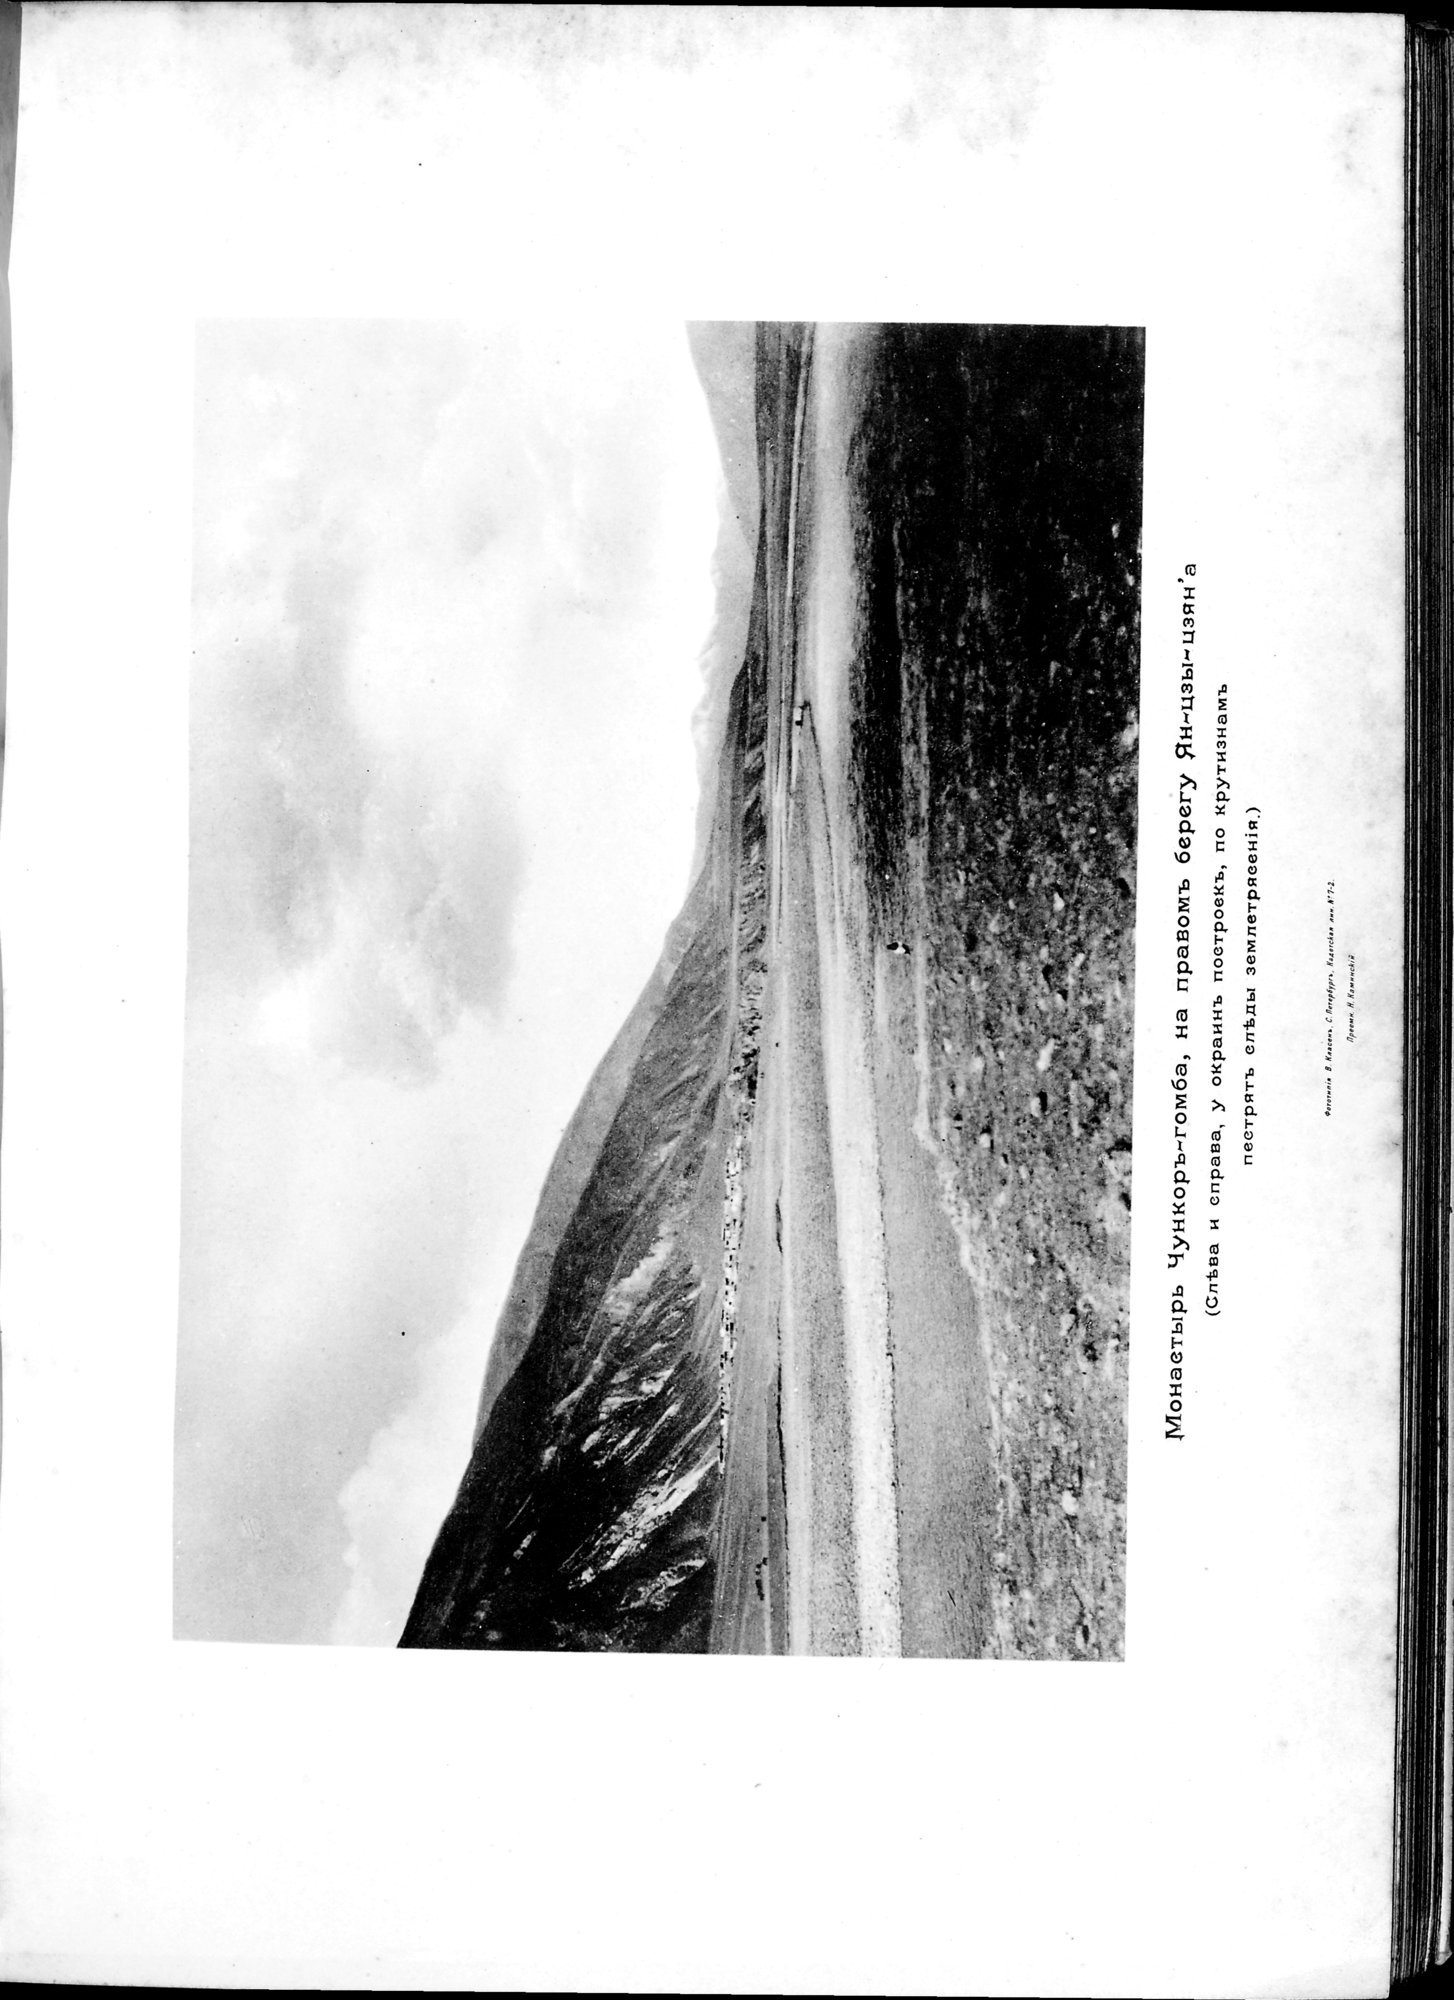 Mongoliia i Kam : vol.2 / Page 295 (Grayscale High Resolution Image)